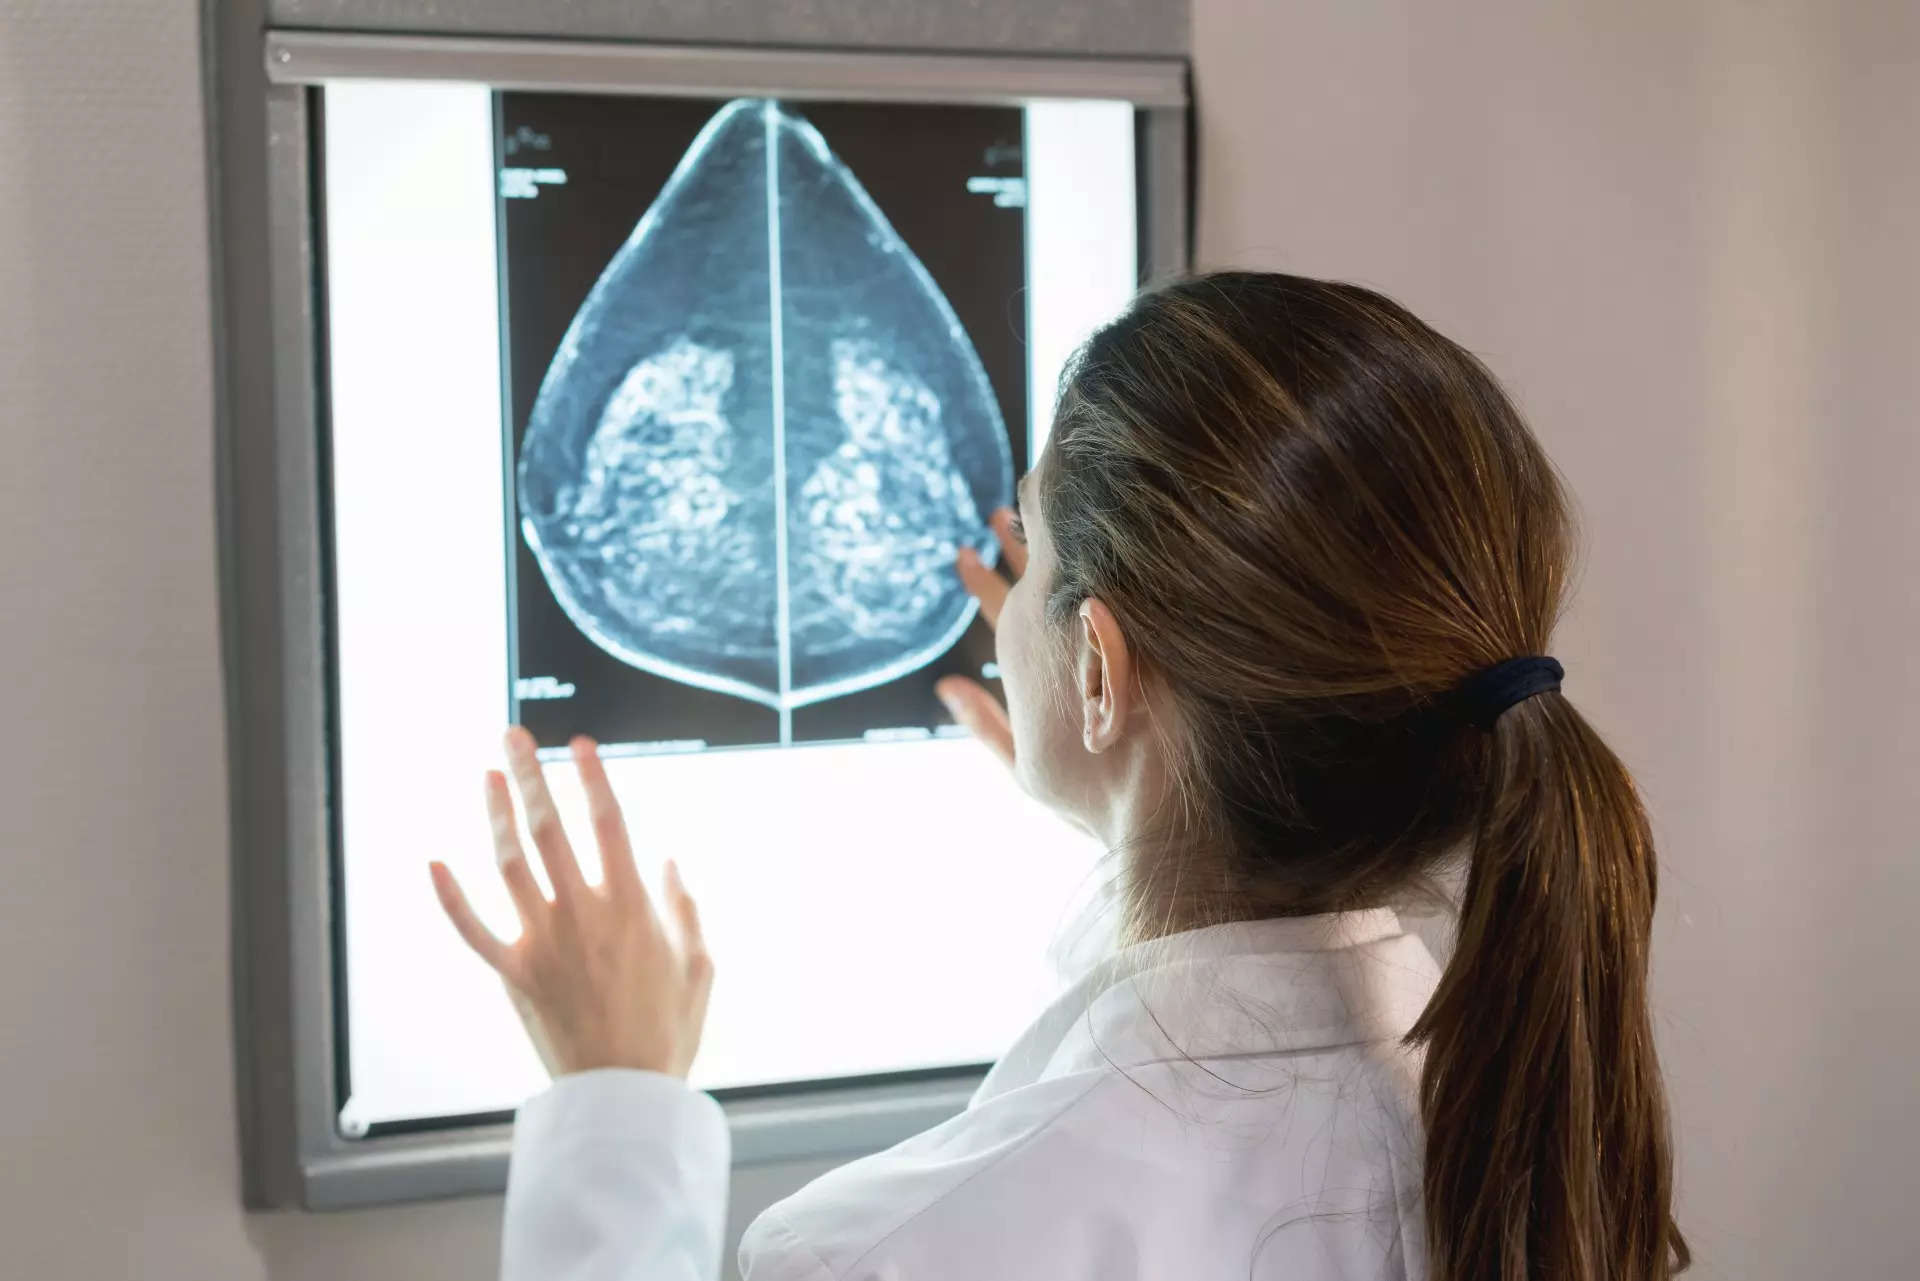 Digital Diagnostic Platform 5C Network introduces ‘Quality Guarantee’ and Borderless Radiology programs